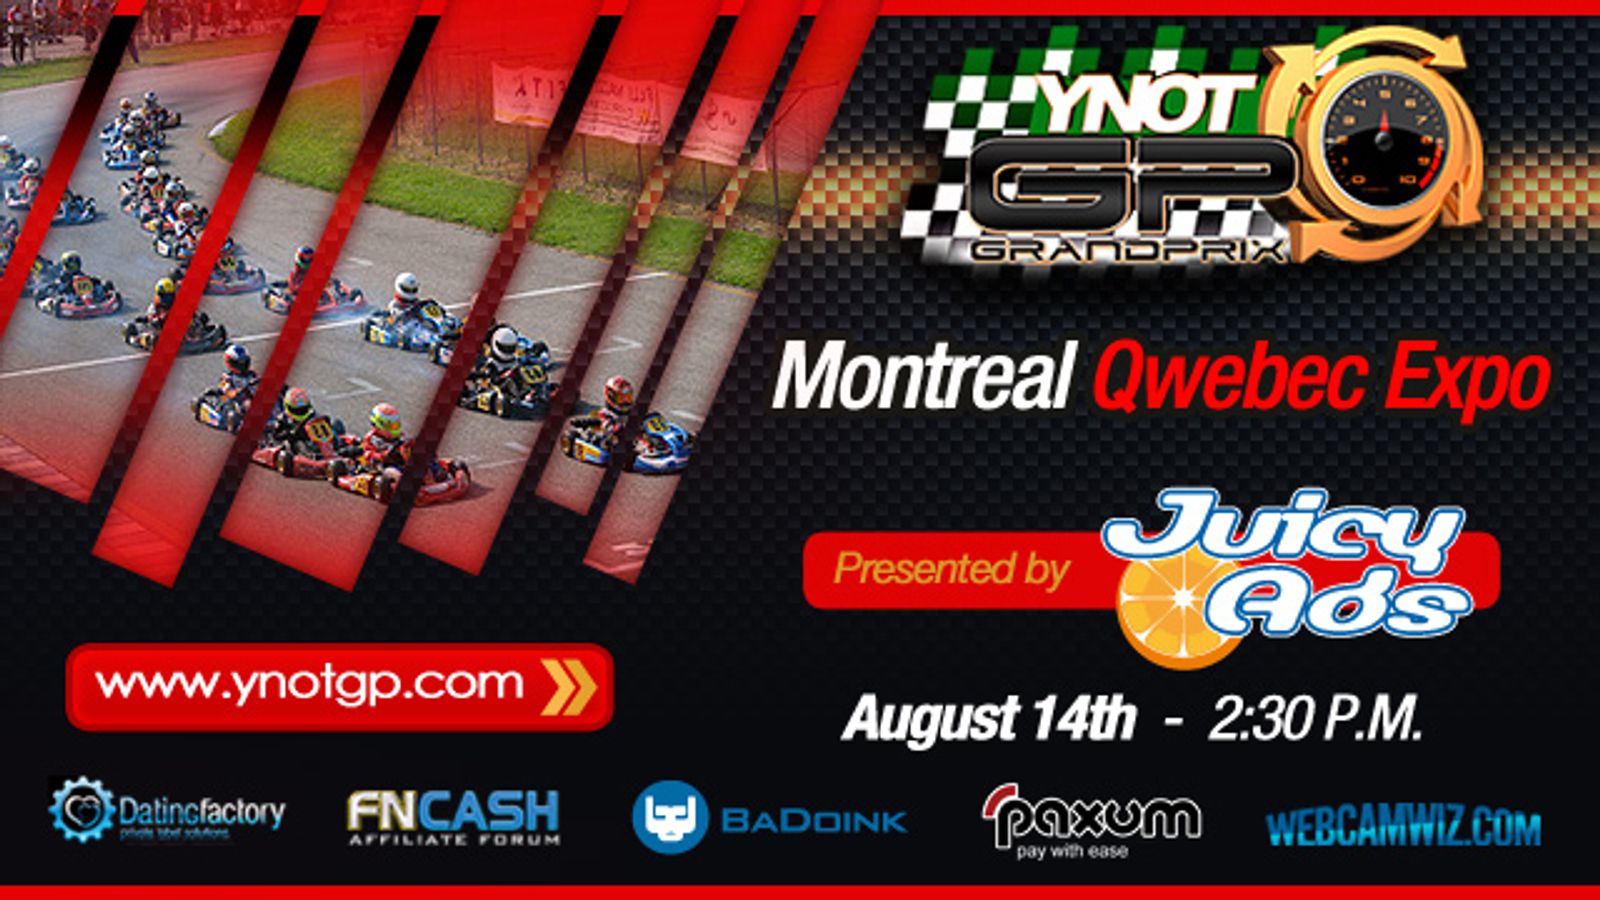 YNOT Grand Prix Set To Return To Montreal